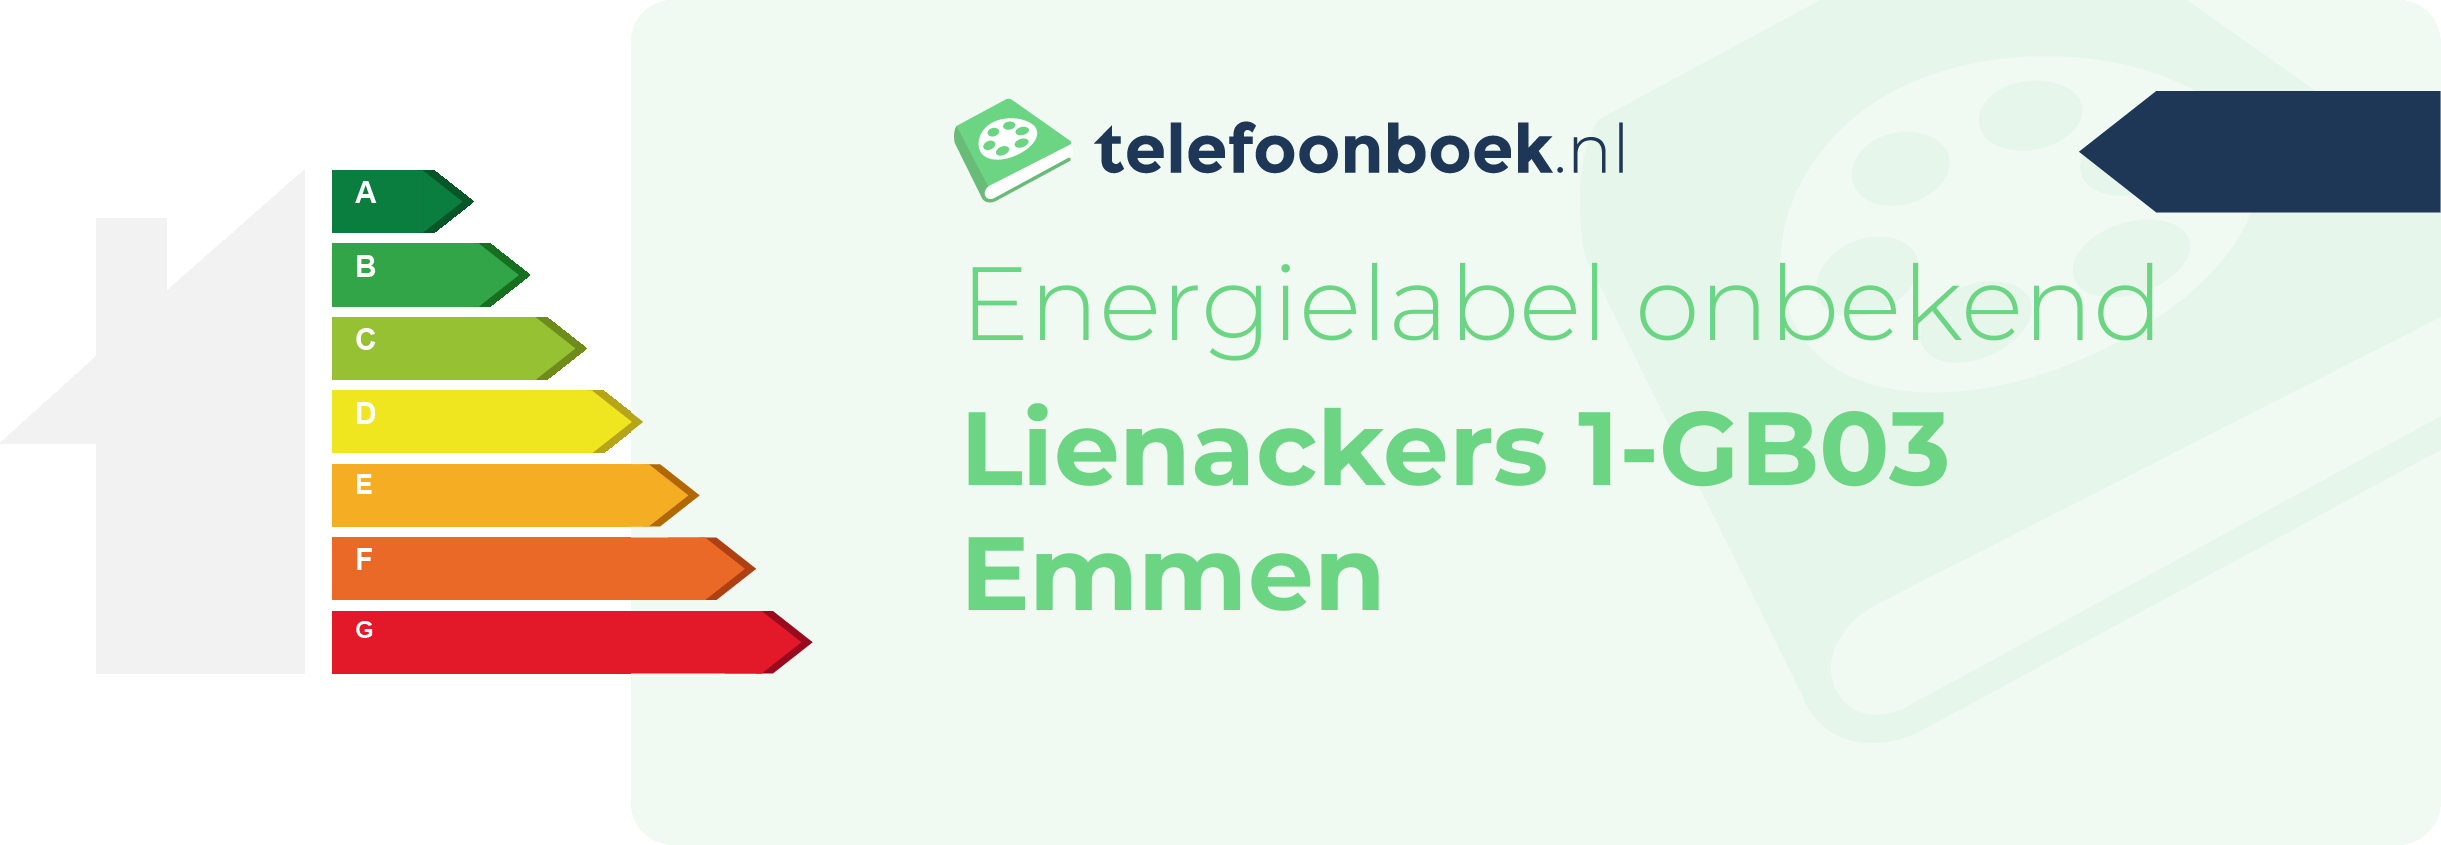 Energielabel Lienackers 1-GB03 Emmen